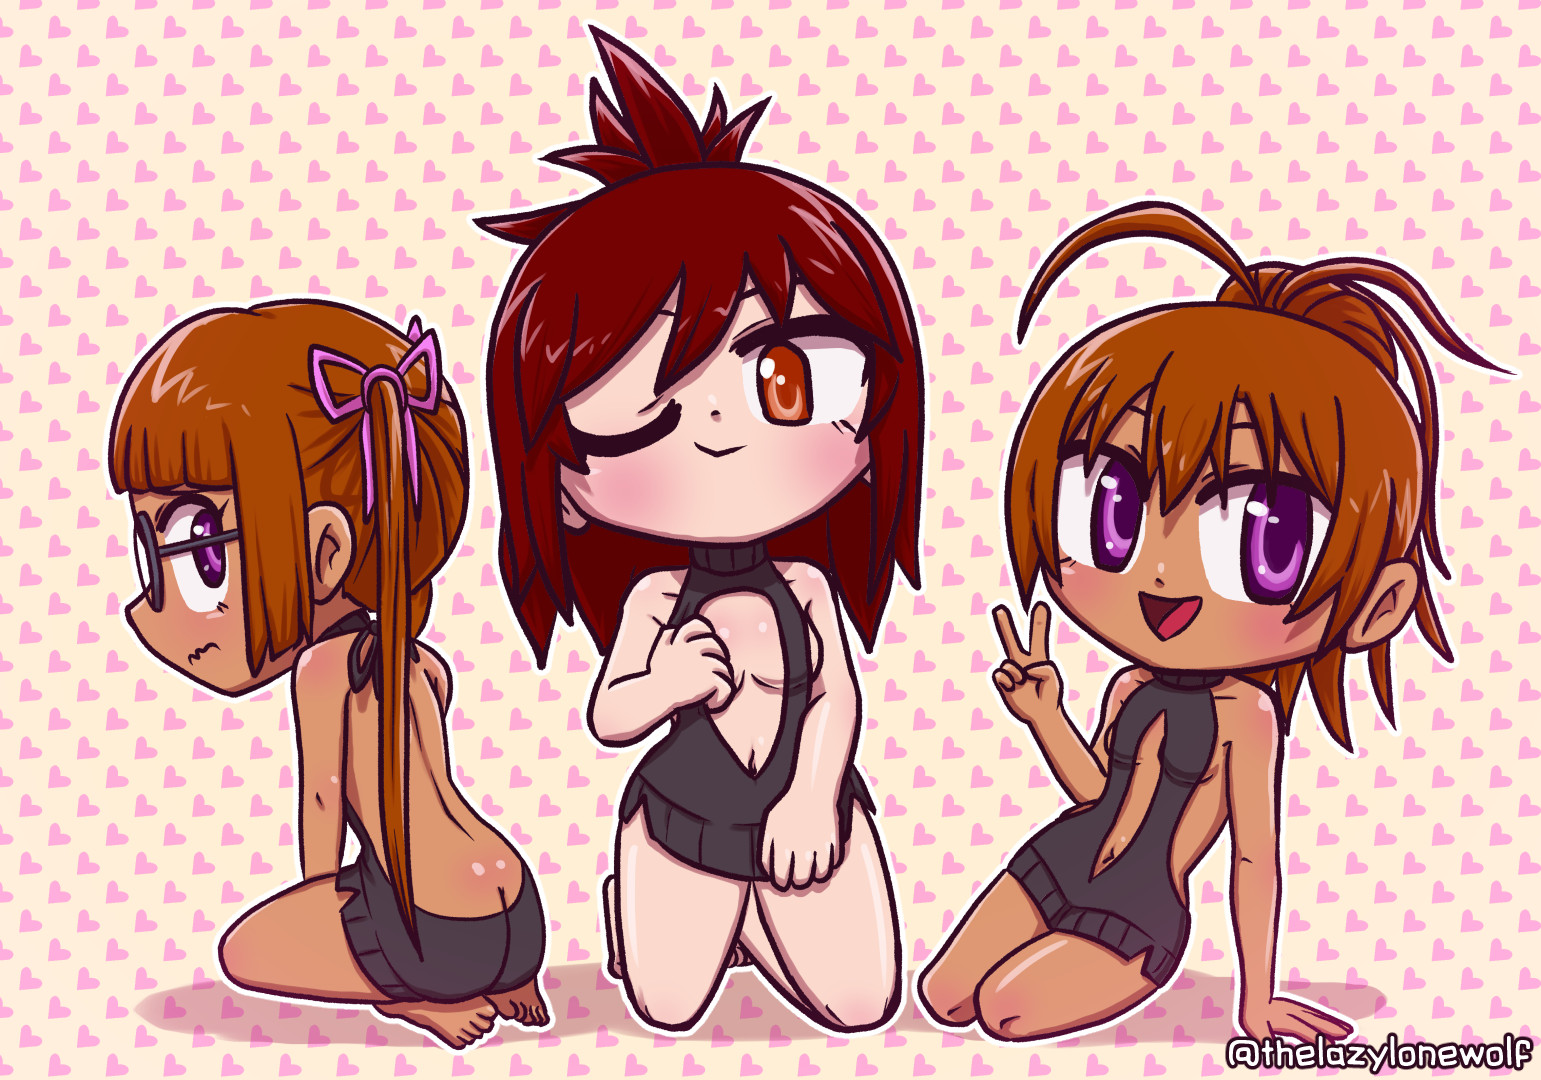 Commissioned artwork of Yuri, Anika, and ShiShi chibis in virgin killer sweaters